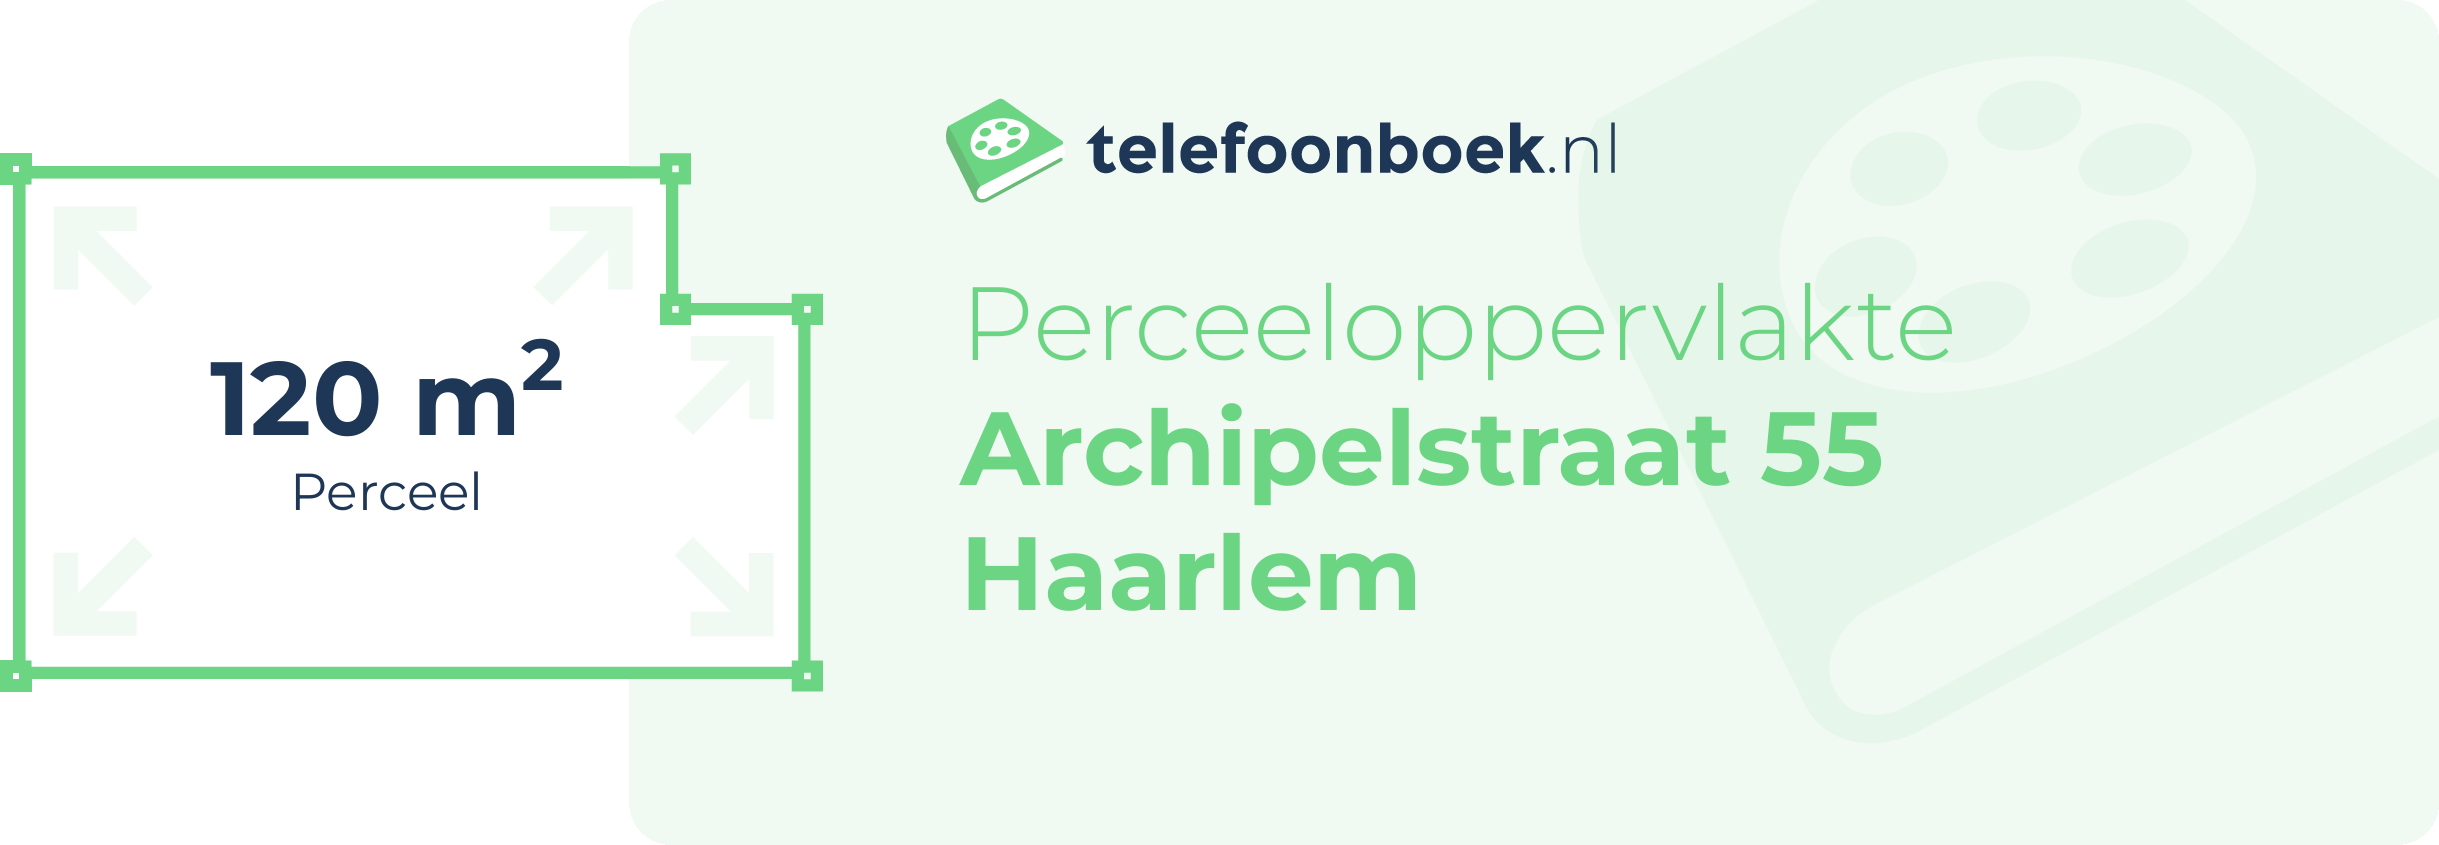 Perceeloppervlakte Archipelstraat 55 Haarlem